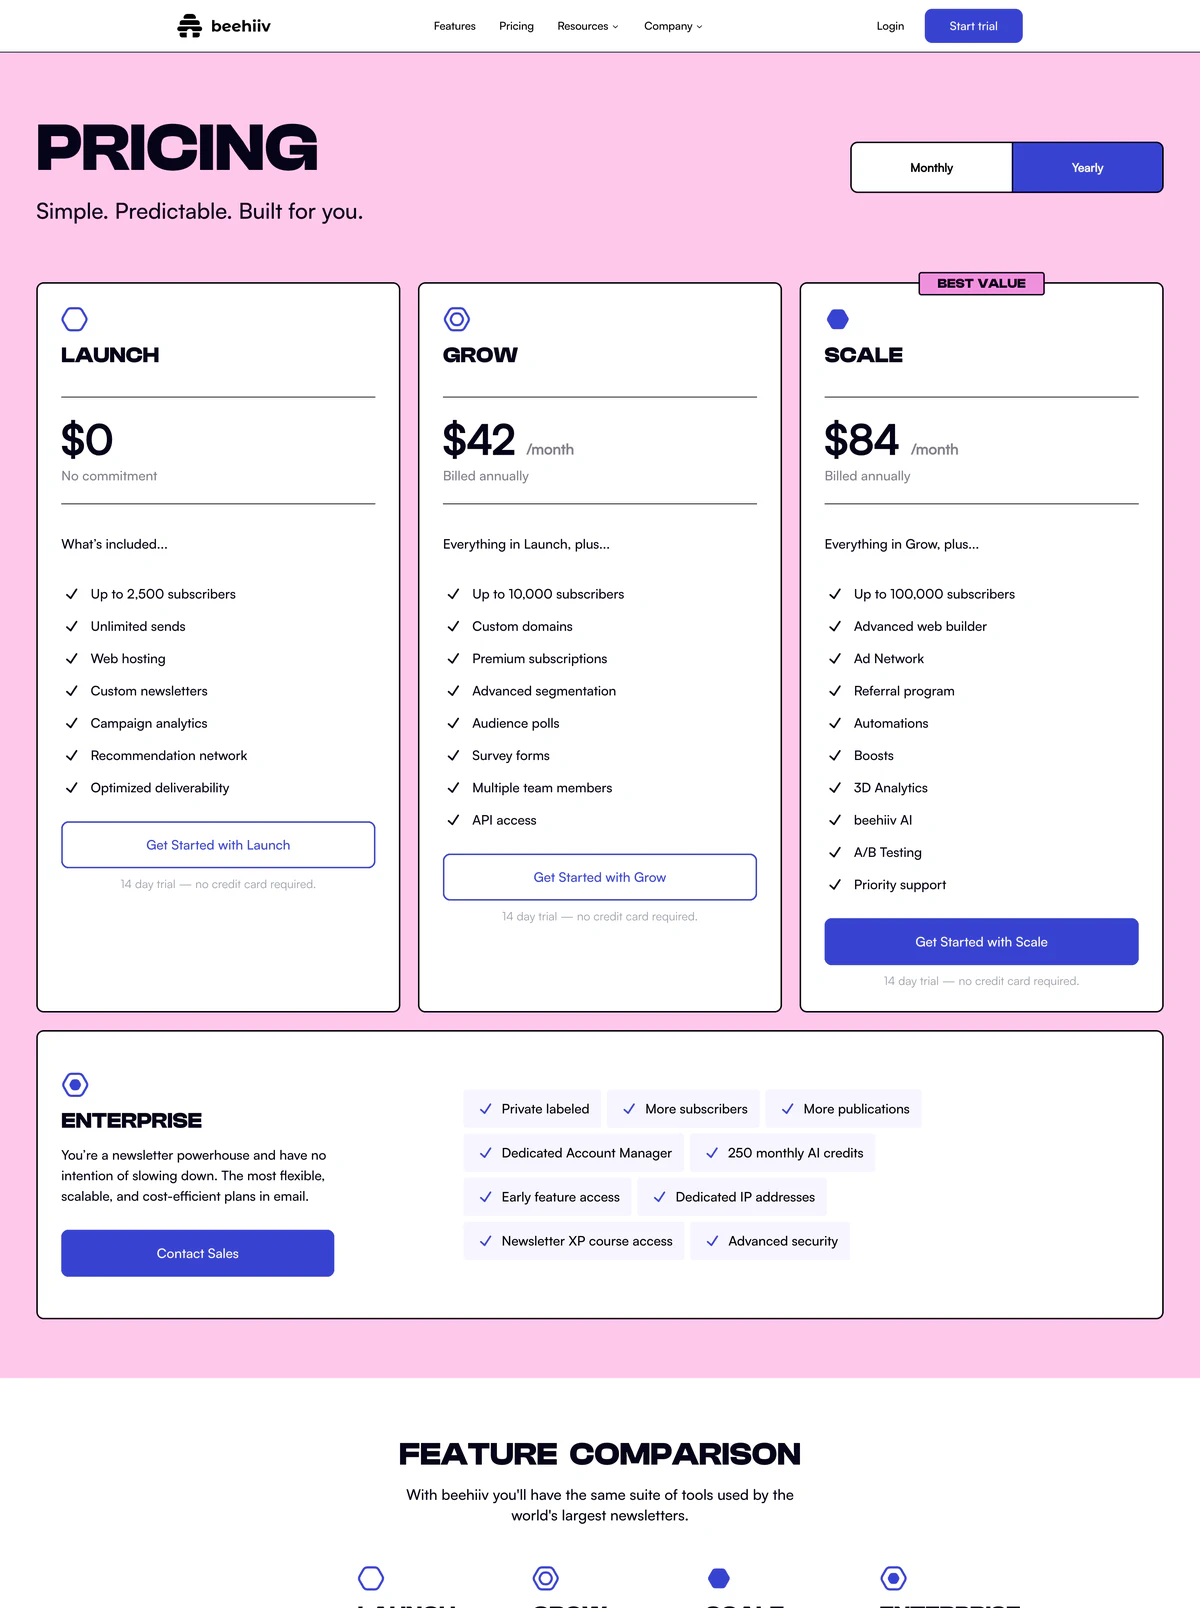 Pricing Page Example Beehiiv